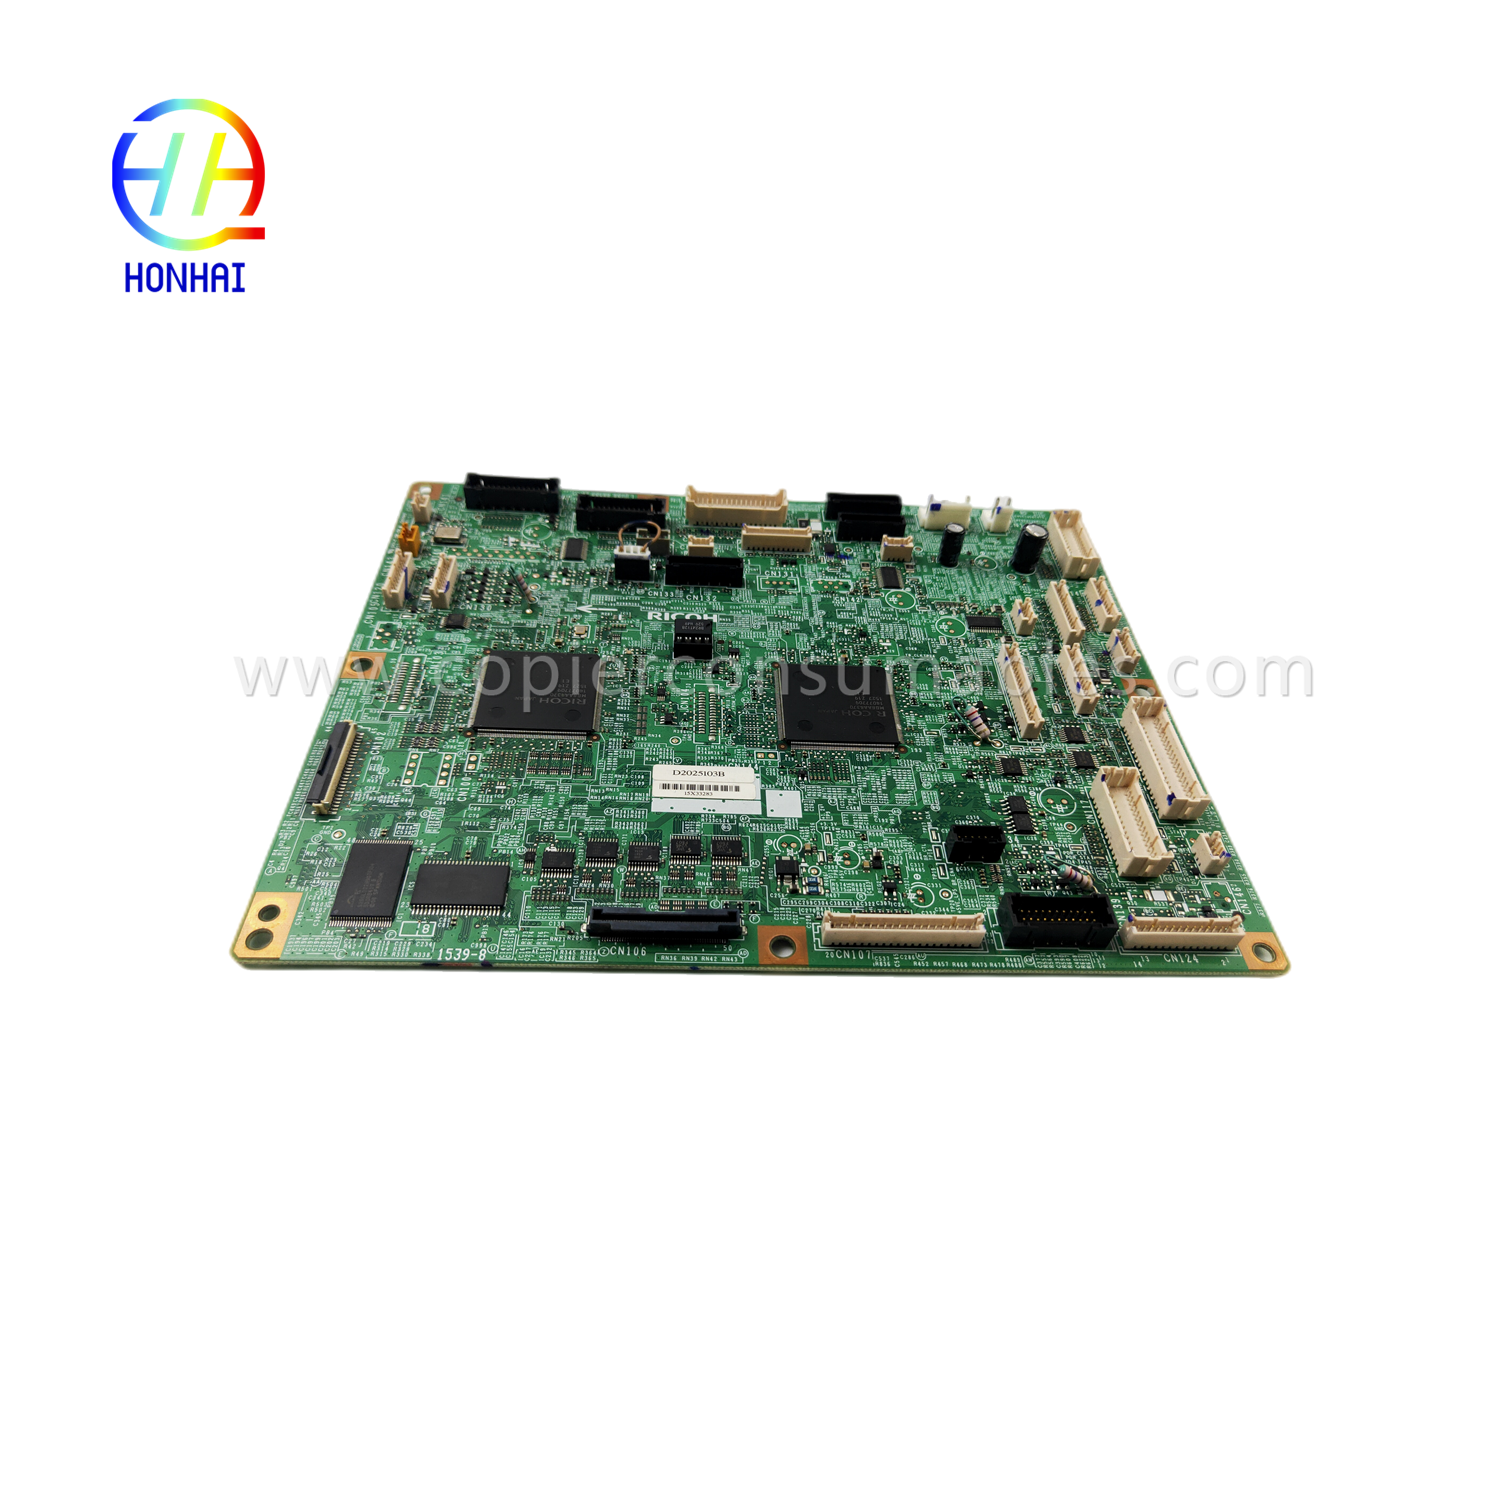 https://c585.goodao.net/bicu-board-for-ricoh-3045-3035-lanier-ld235-ld245-savin-4035-4045-bicu-board-assemblyproduct/